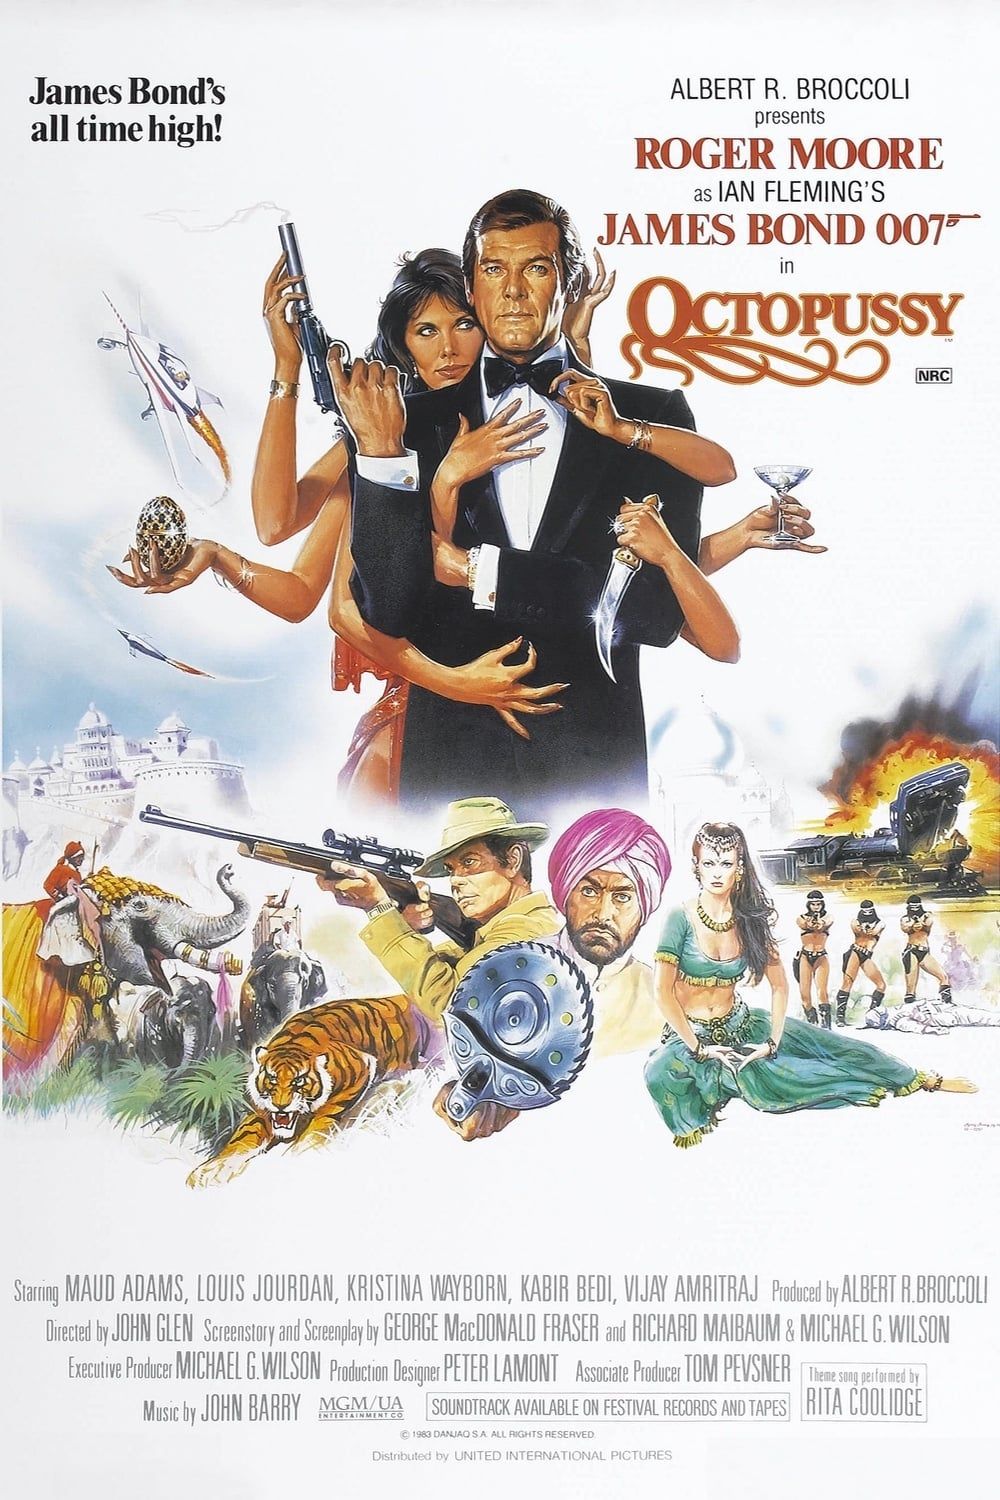 Bondcast 2.0 - 13 - Octopussy (1983)